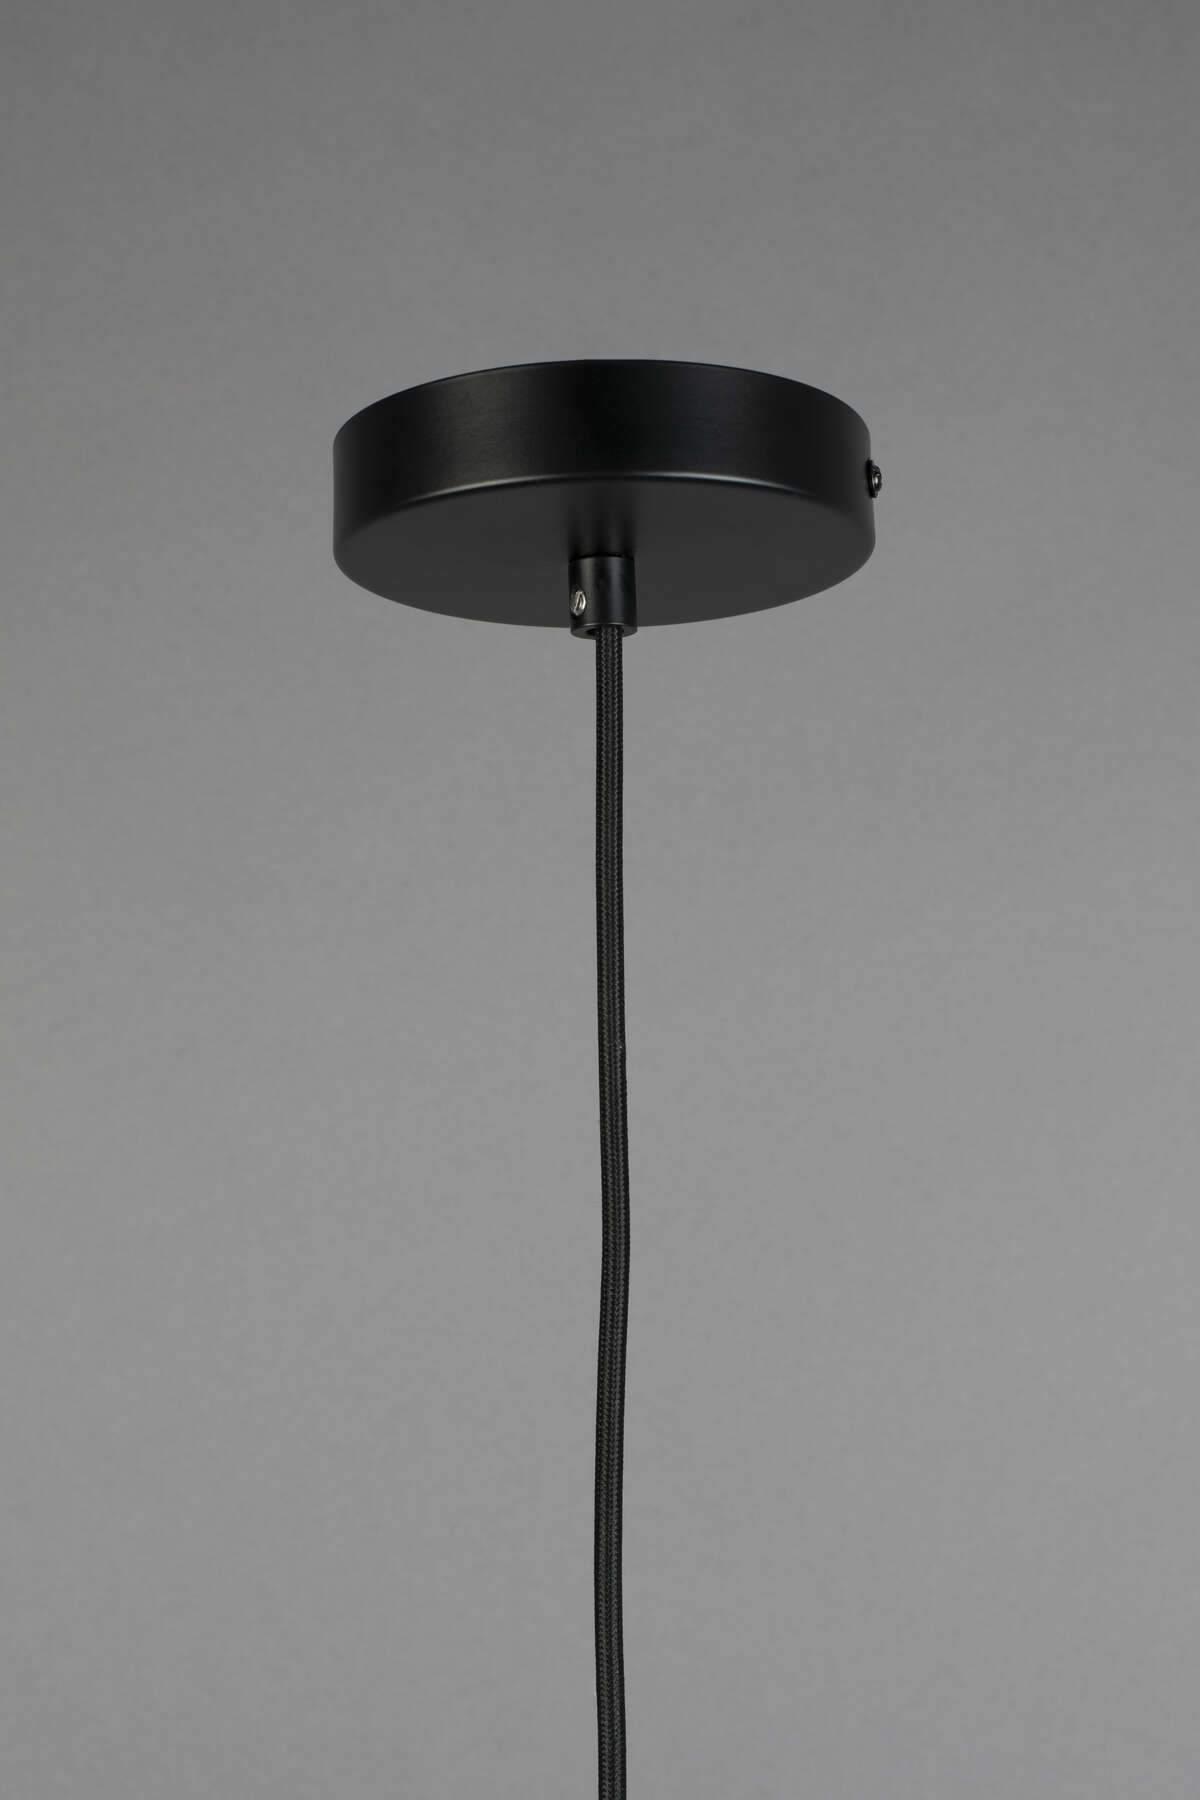 MING round pendant lamp 35, Dutchbone, Eye on Design